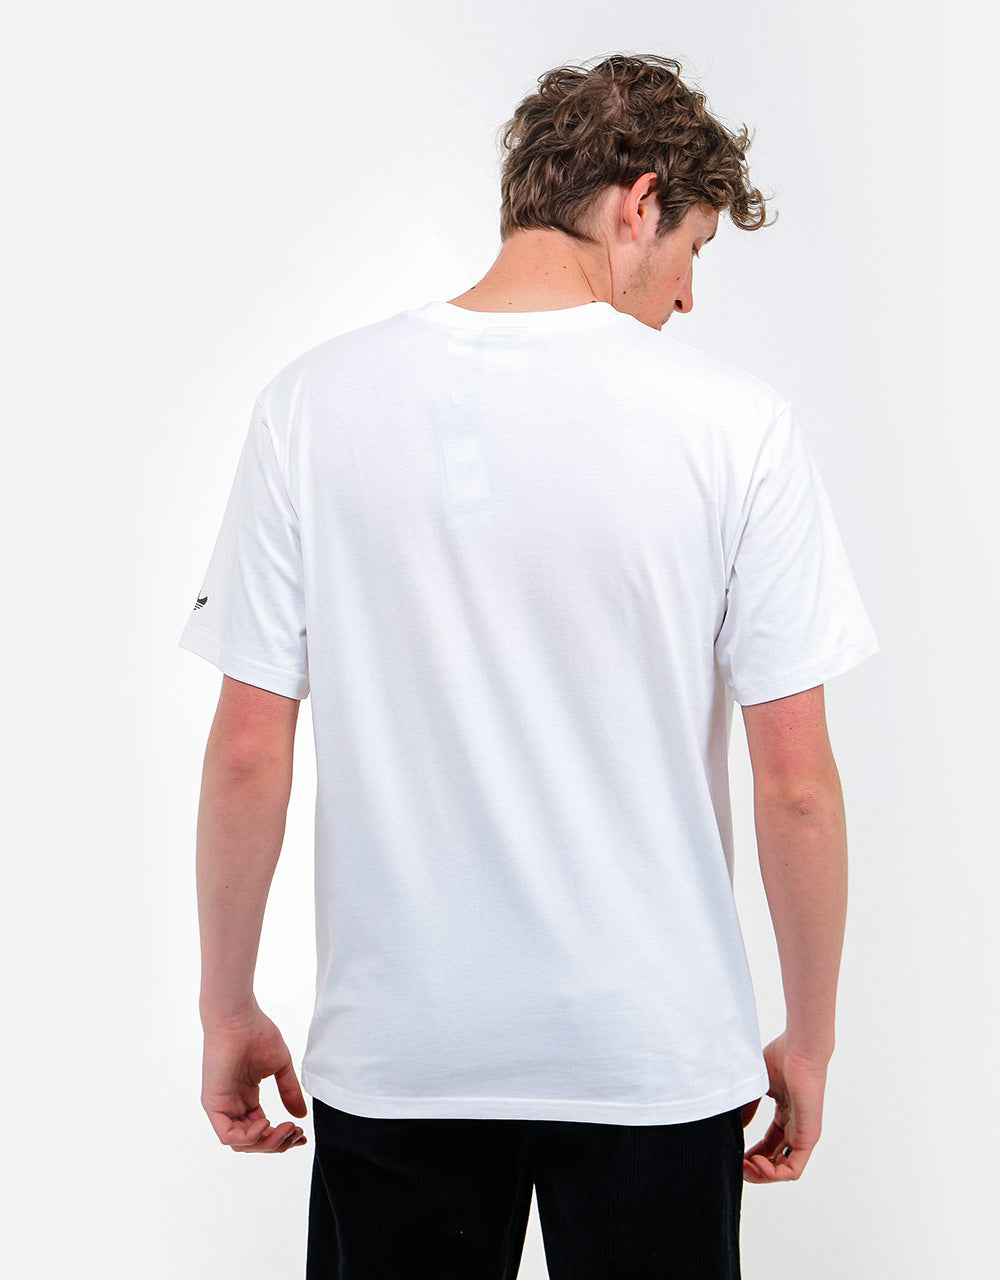 adidas Brainwash Victim T-Shirt - White